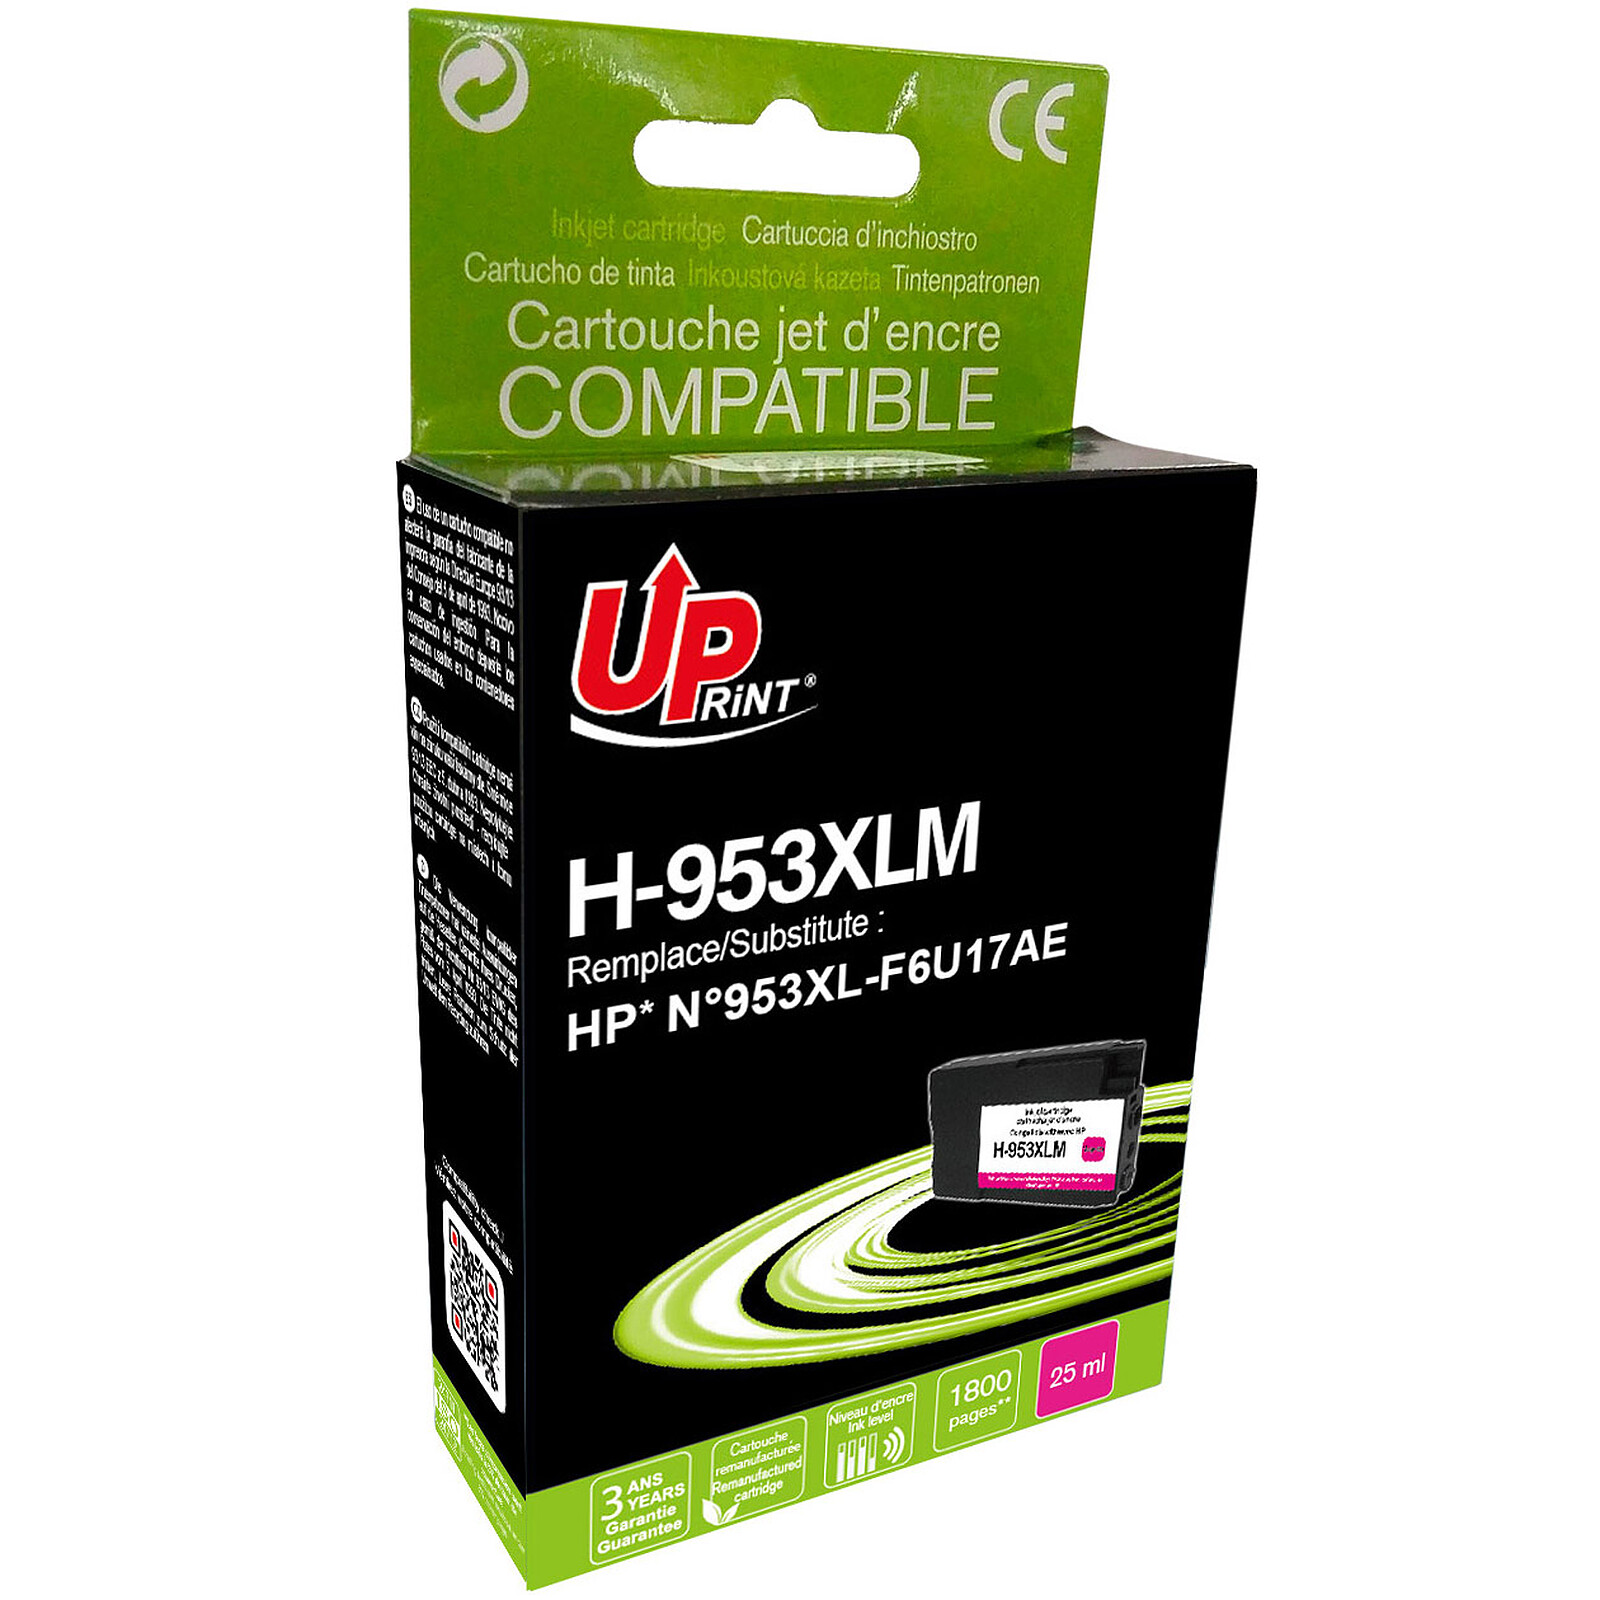 Cartouche compatible HP 953XL - pack de 4 - noir, cyan, magenta